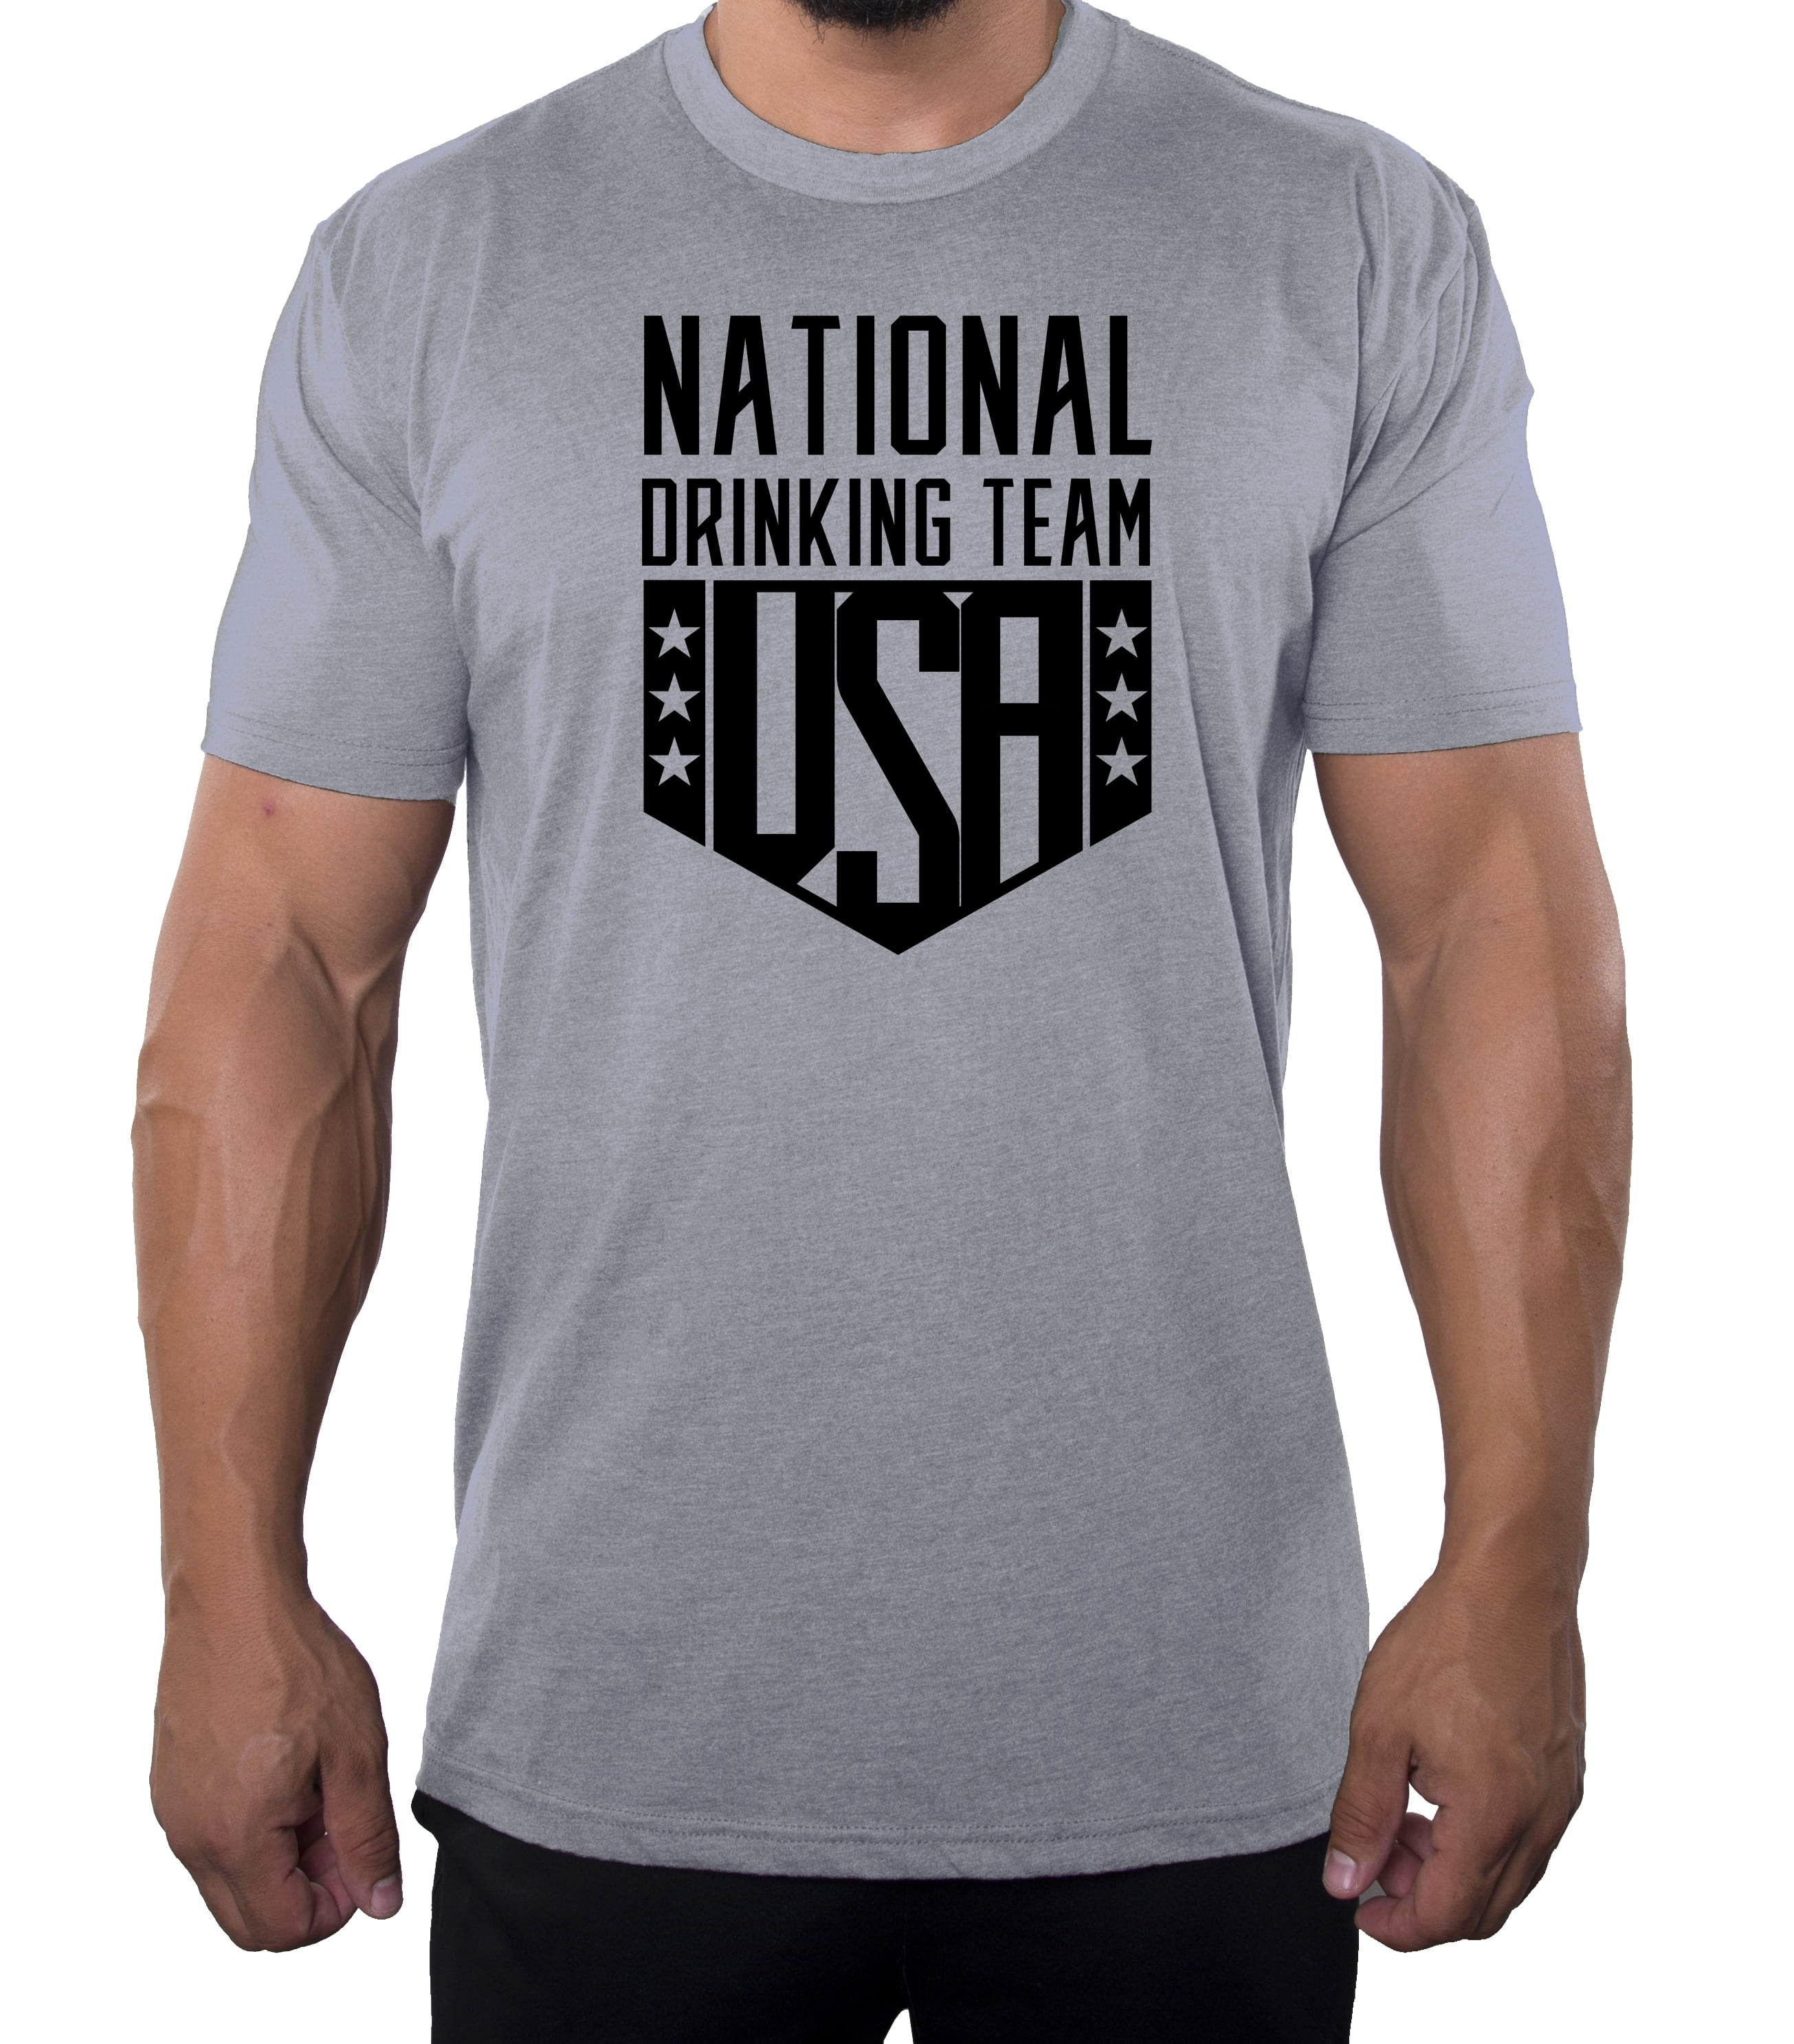 USA Drinking Team, Funny Beer Men's T-shirts - Heather MH200PATRIOT S13 4XL - Walmart.com